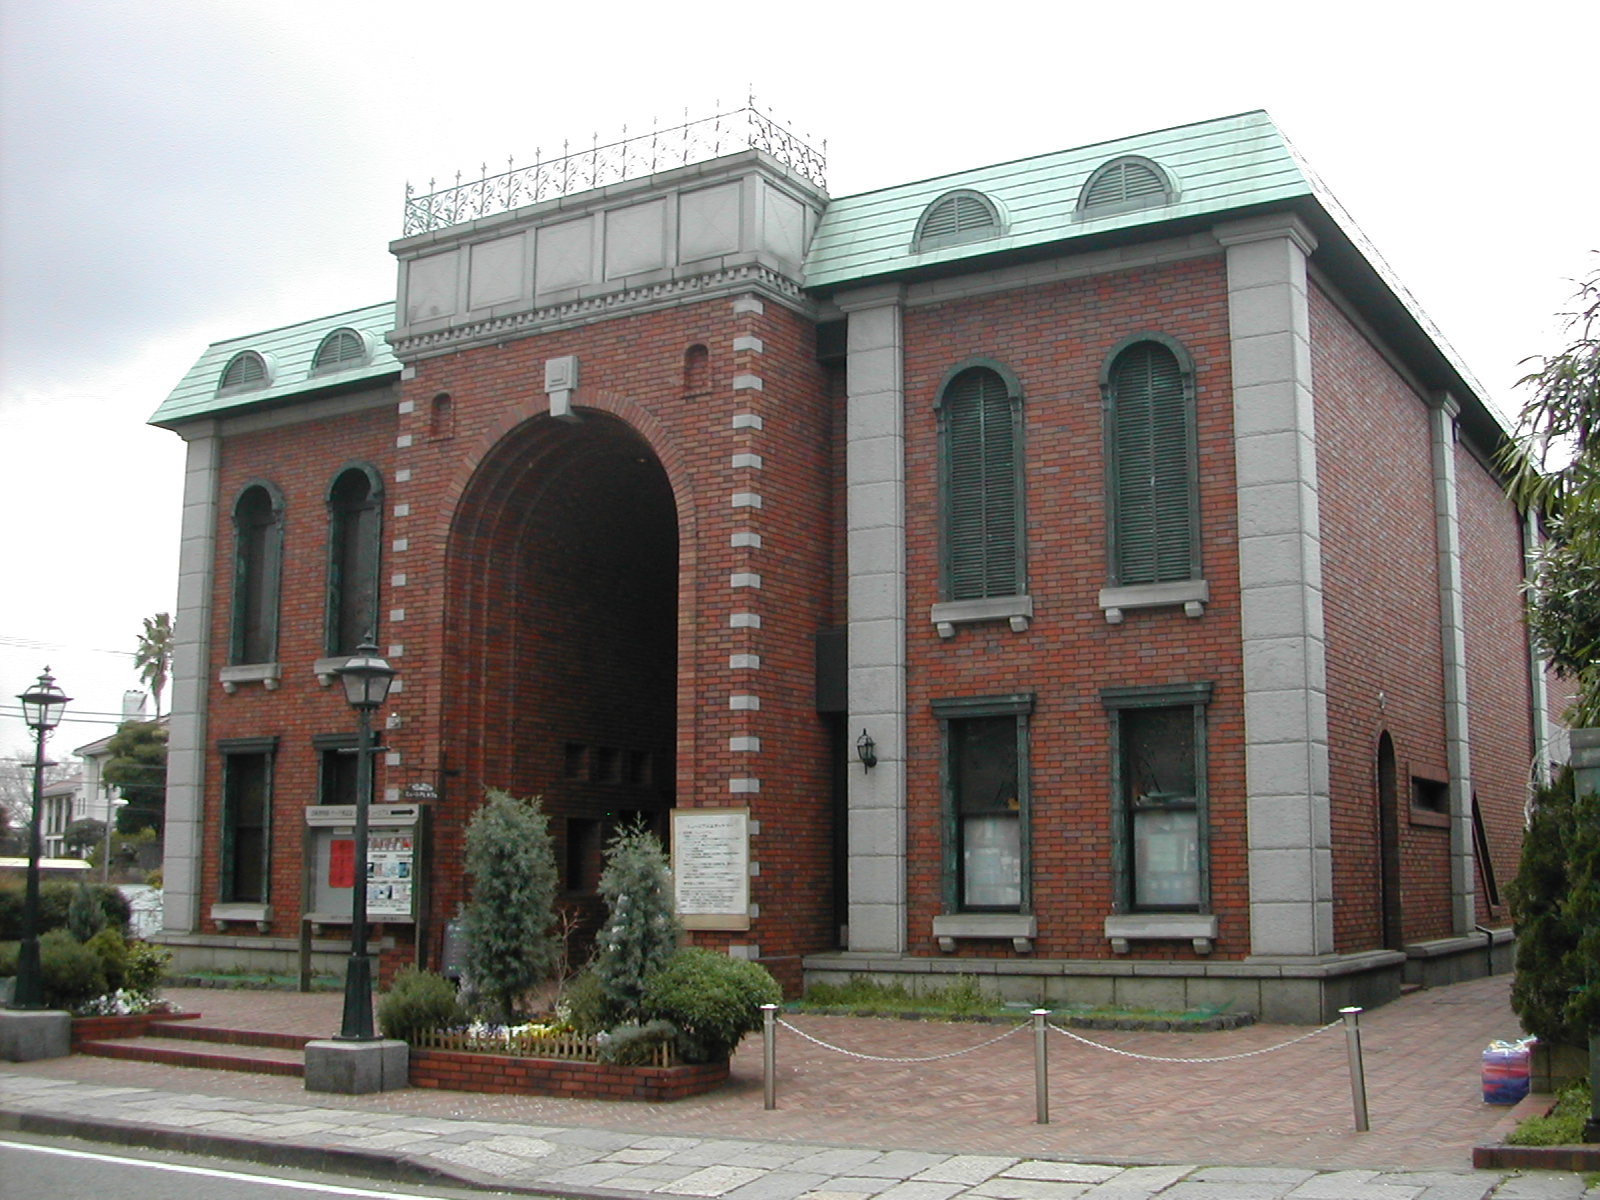 Iwasaki Museum & Gete (Gaiety or Goethe) Theater